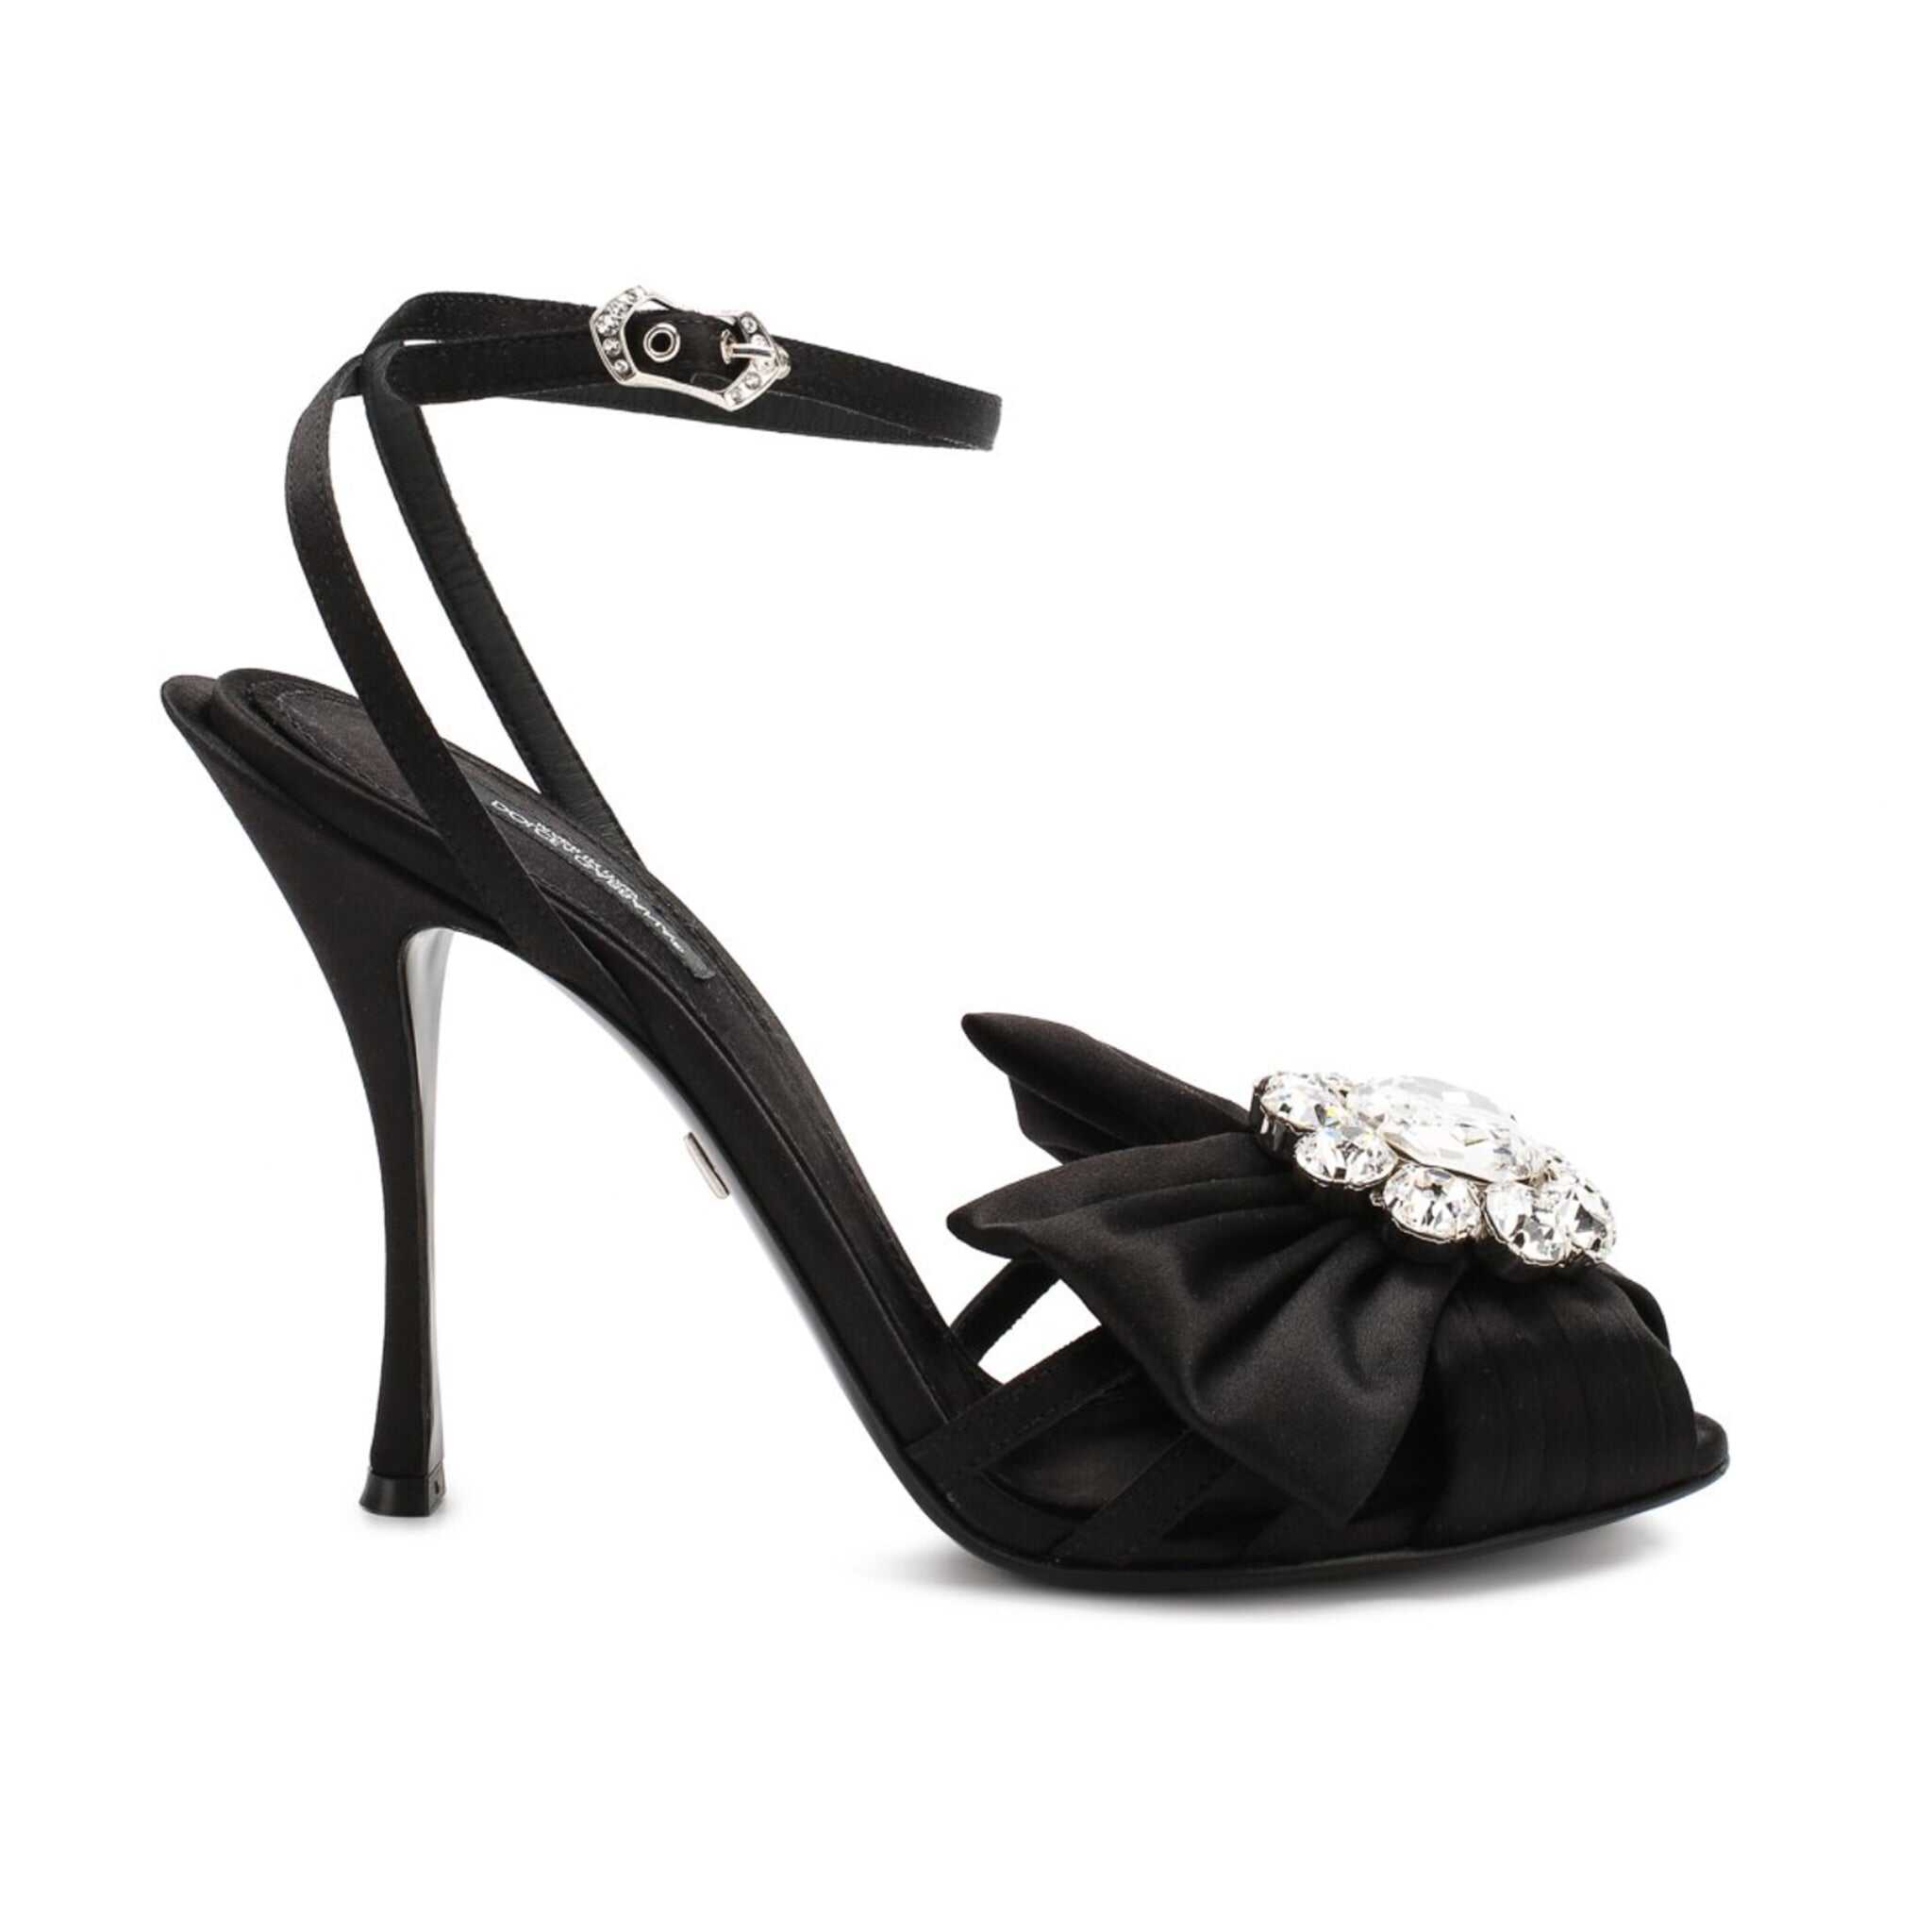 Dolce & Gabbana Dolce & Gabbana Bette Crystal Sandals Black